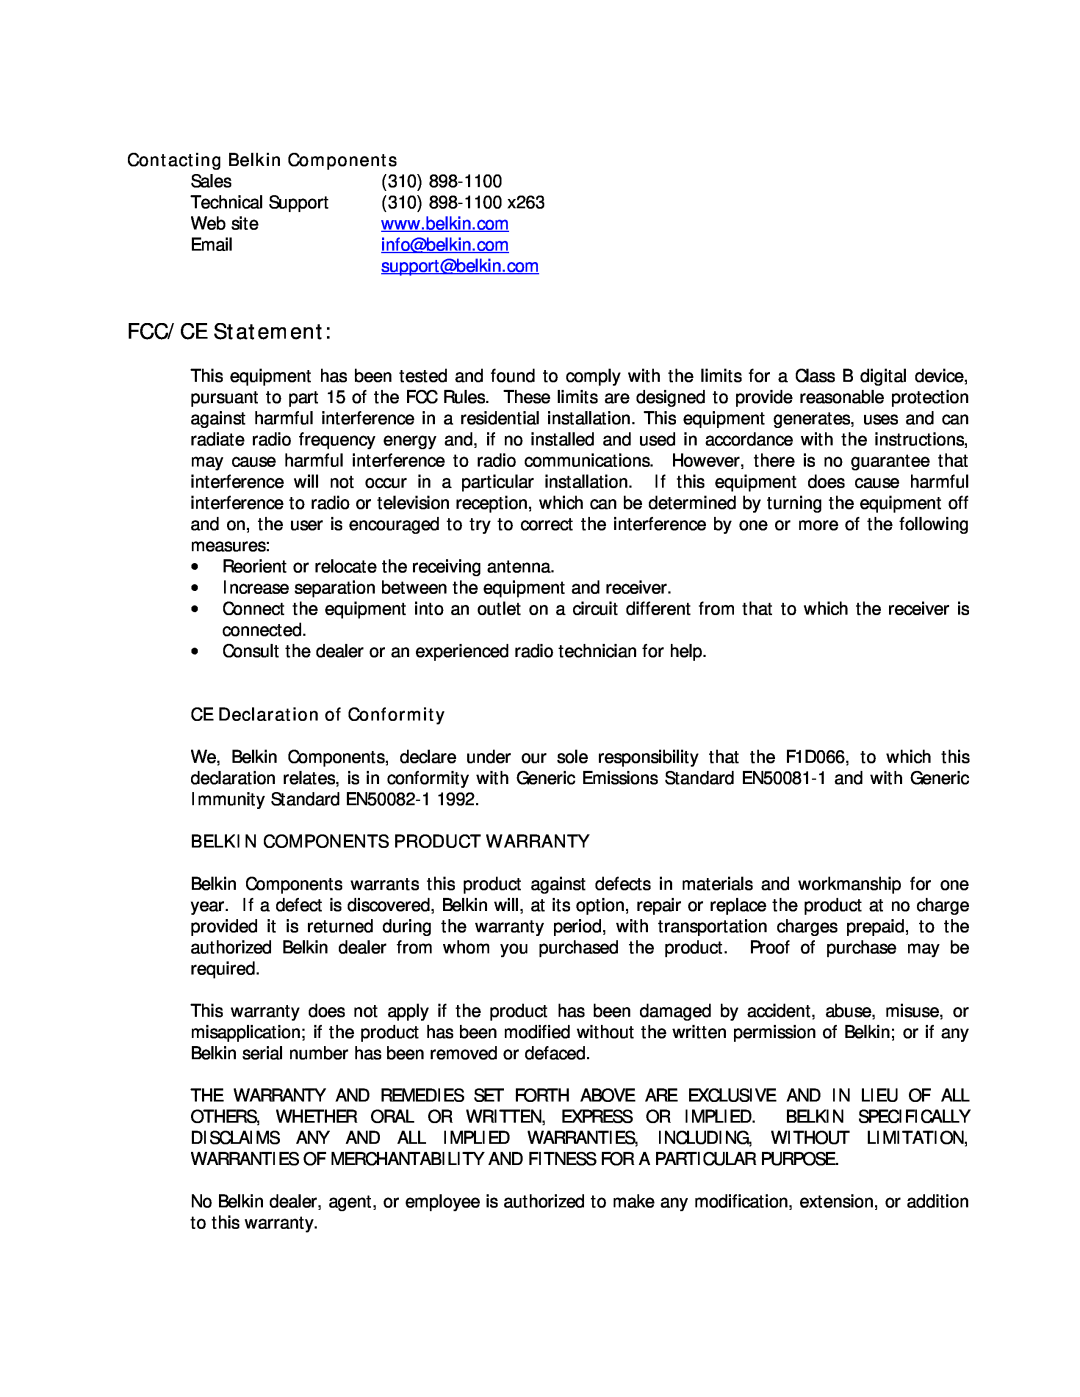 Belkin P72115 warranty FCC/CE Statement, Contacting Belkin Components, CE Declaration of Conformity, info@belkin.com 